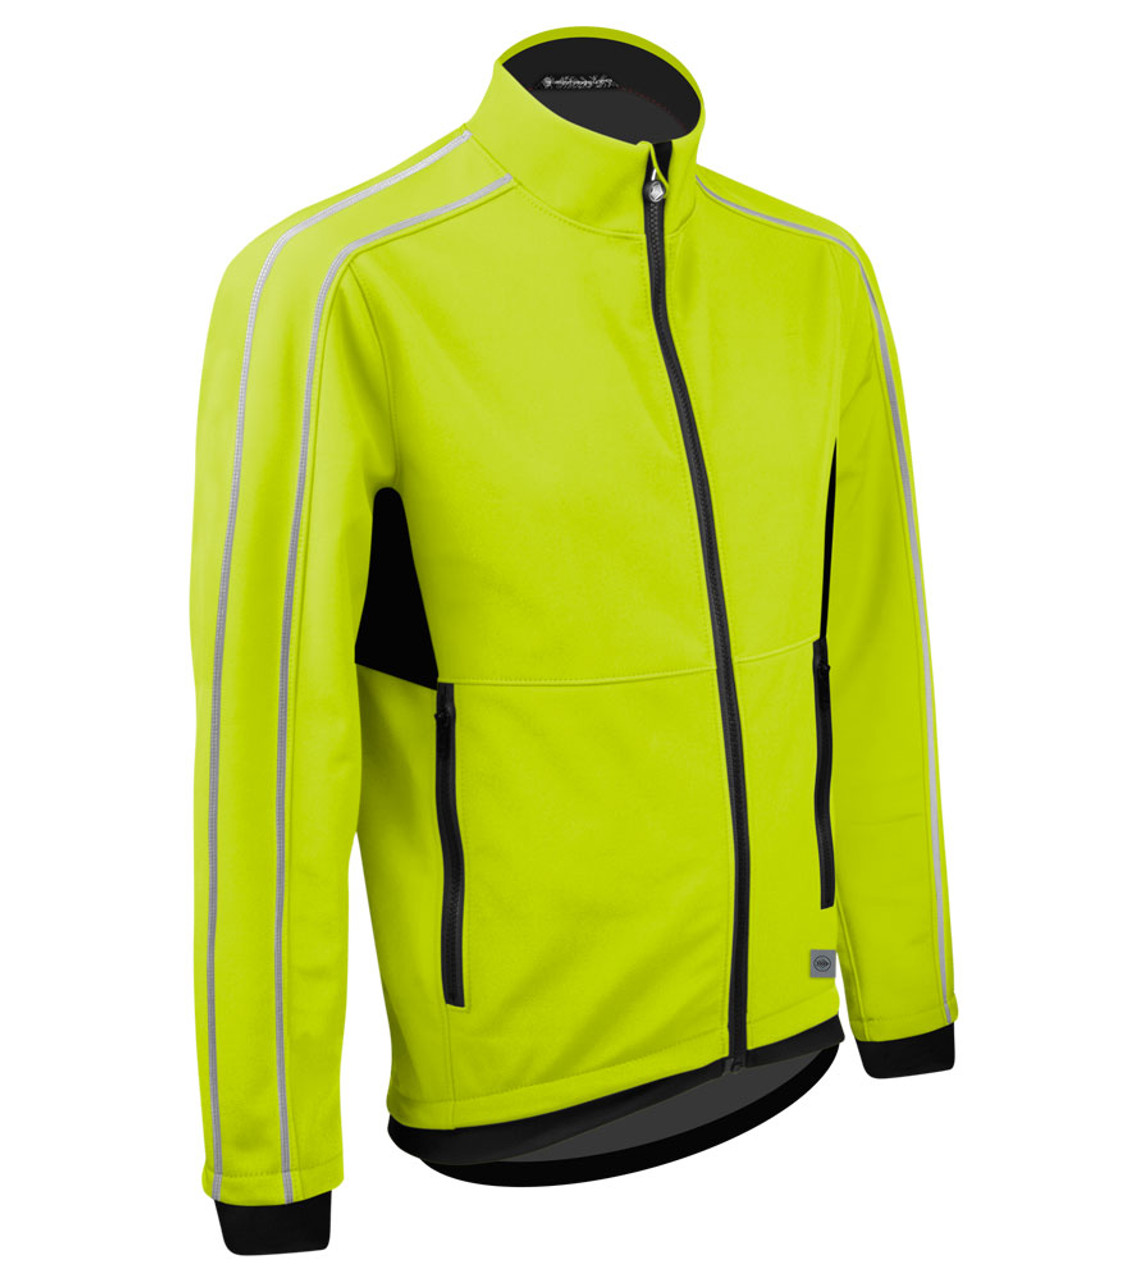 Men's USA Softshell Cycling Jacket - Quality Cold Weather Biking Coat